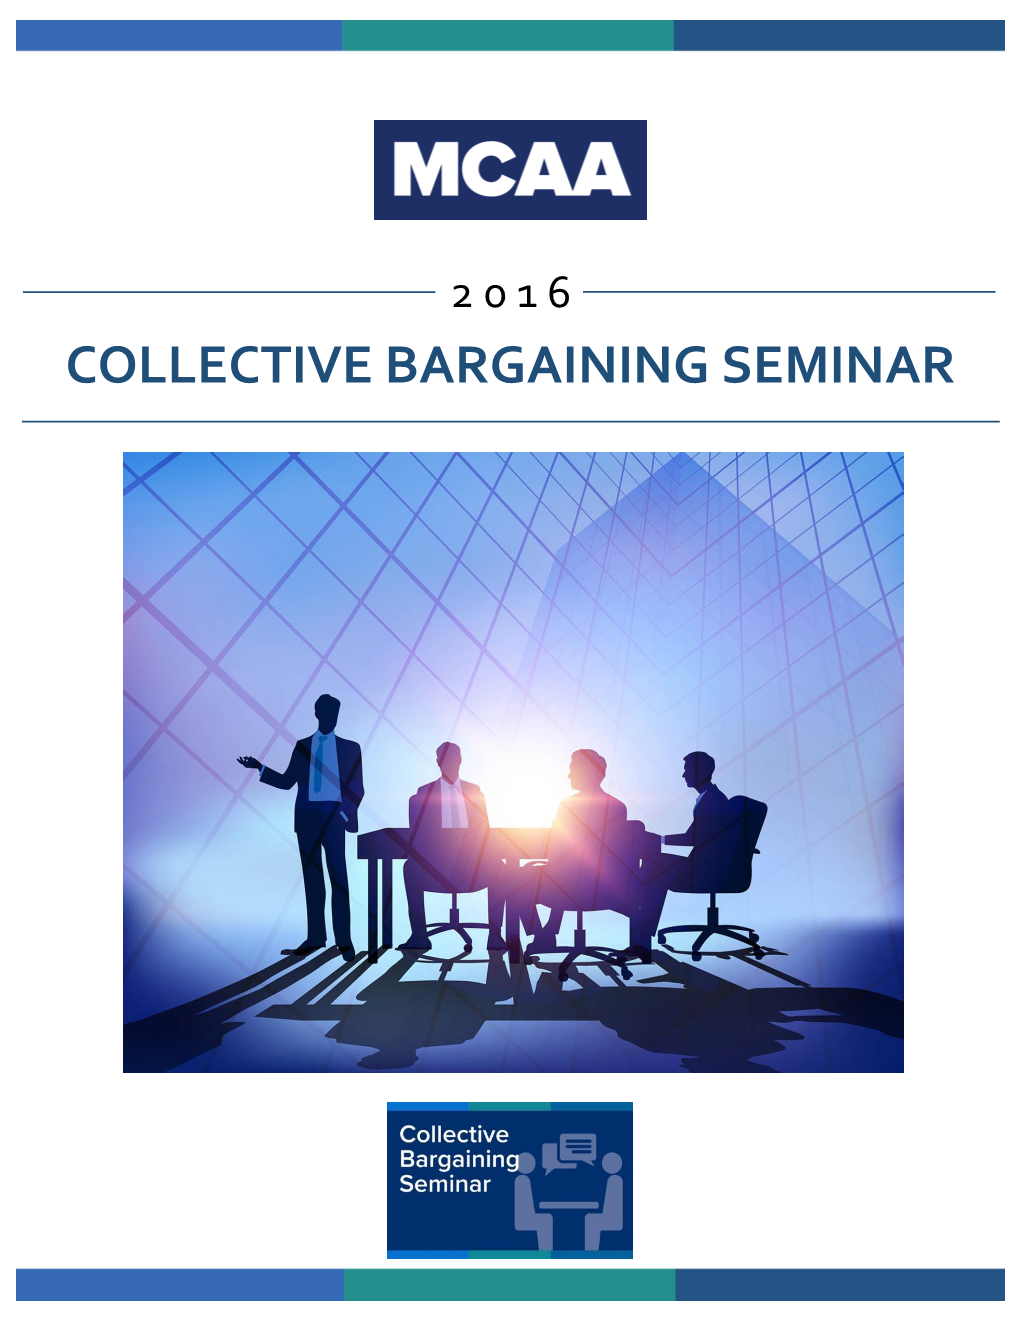 Collective Bargaining Seminar